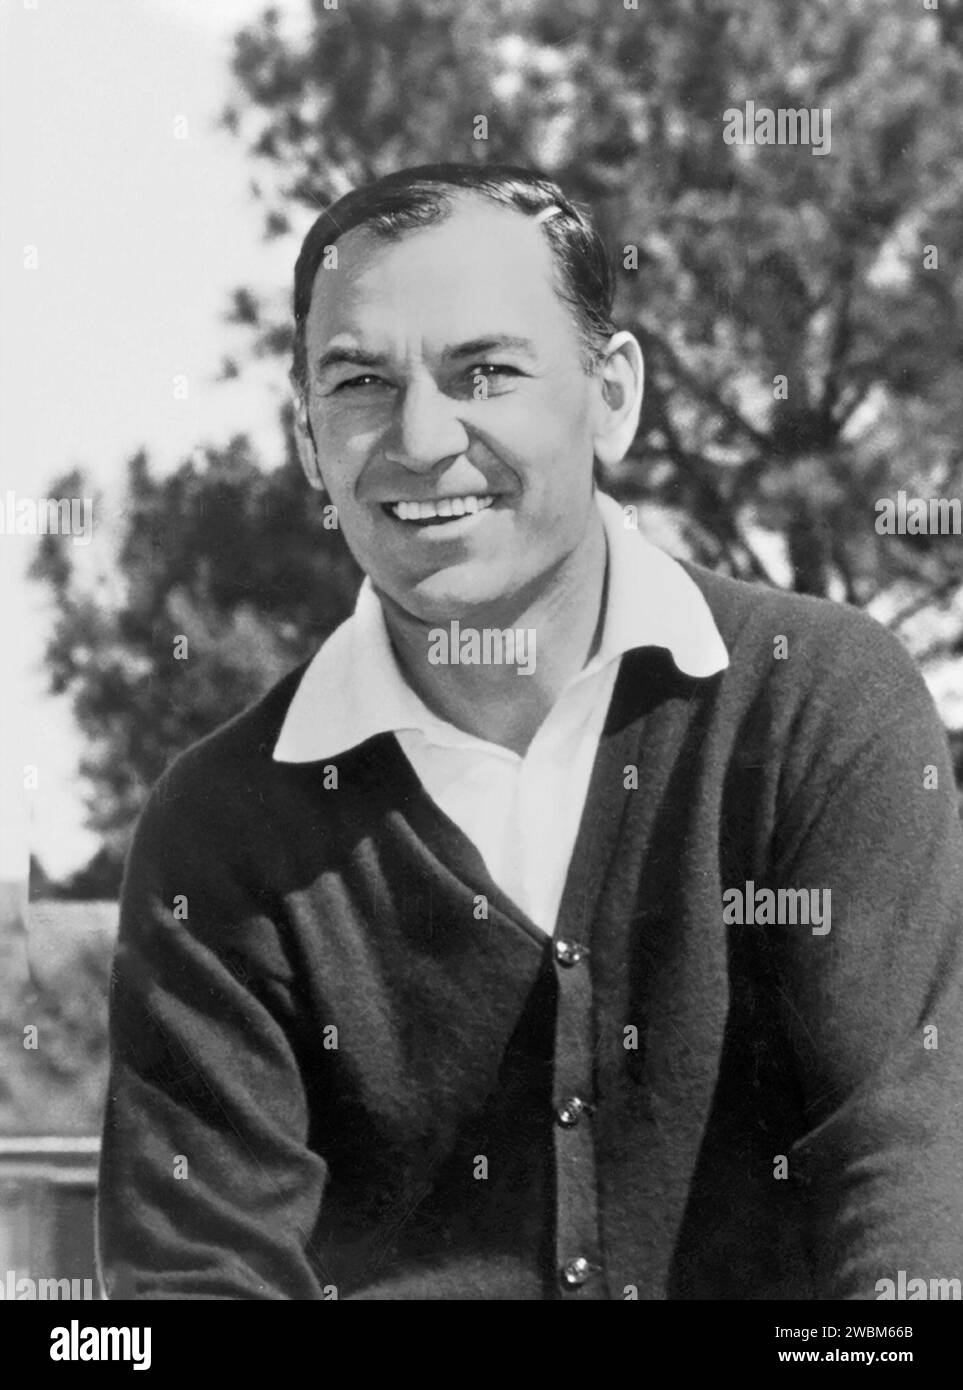 Ben Hogan. Portrait of the American professional golfer, William Ben Hogan (1912-1997) by Morgan Fitz, c. 1953 Stock Photo